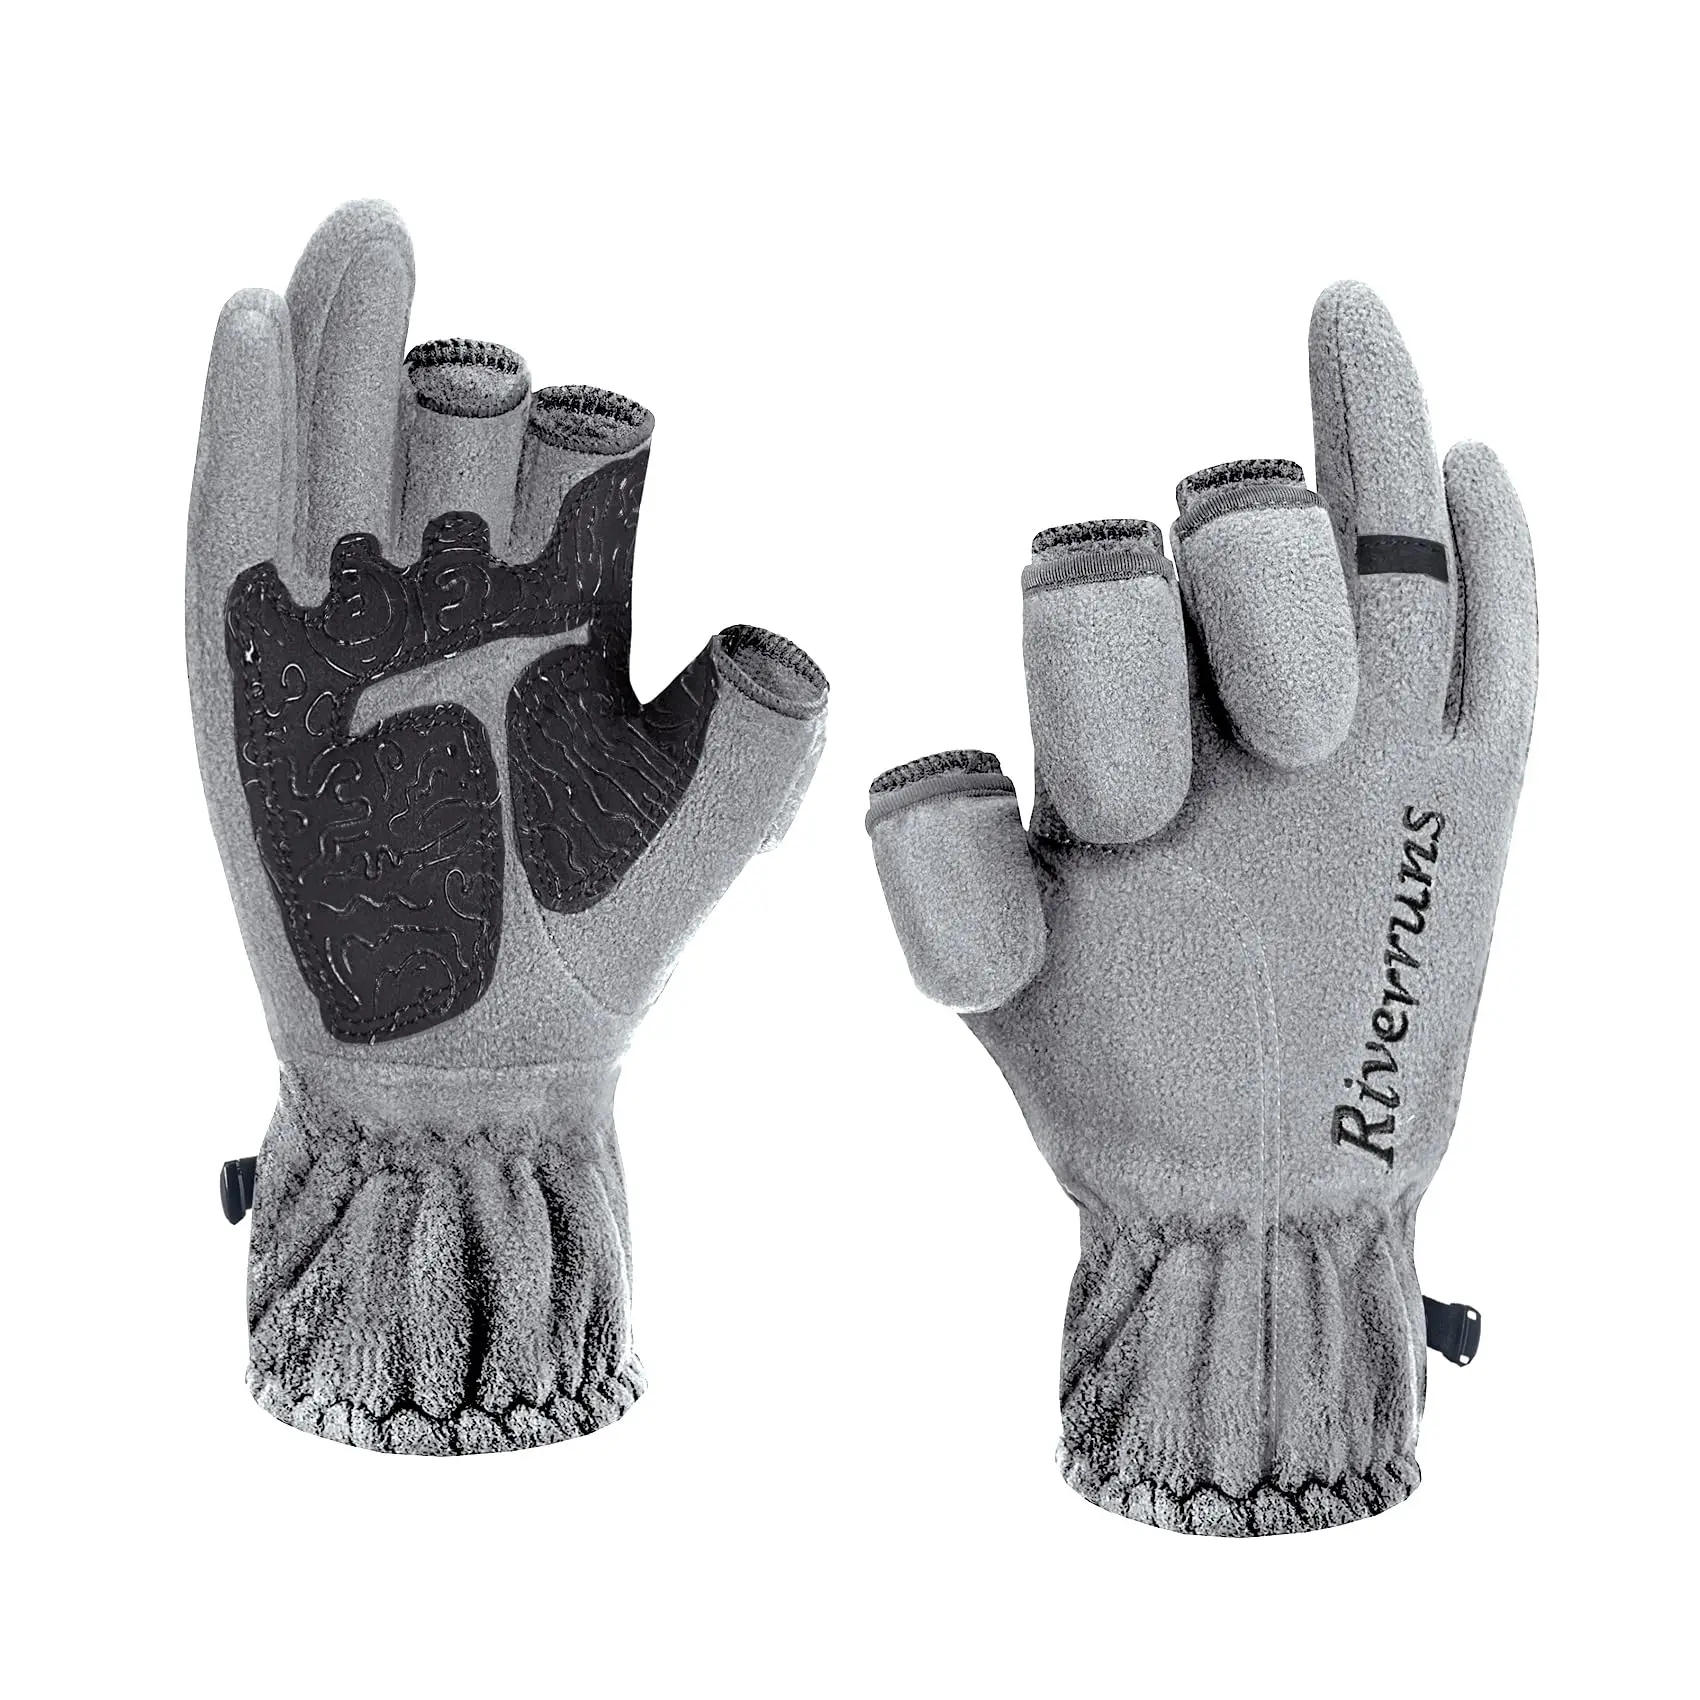 Riverruns Fleece Fishing Gloves Colder Weather Ice Fishing Gloves